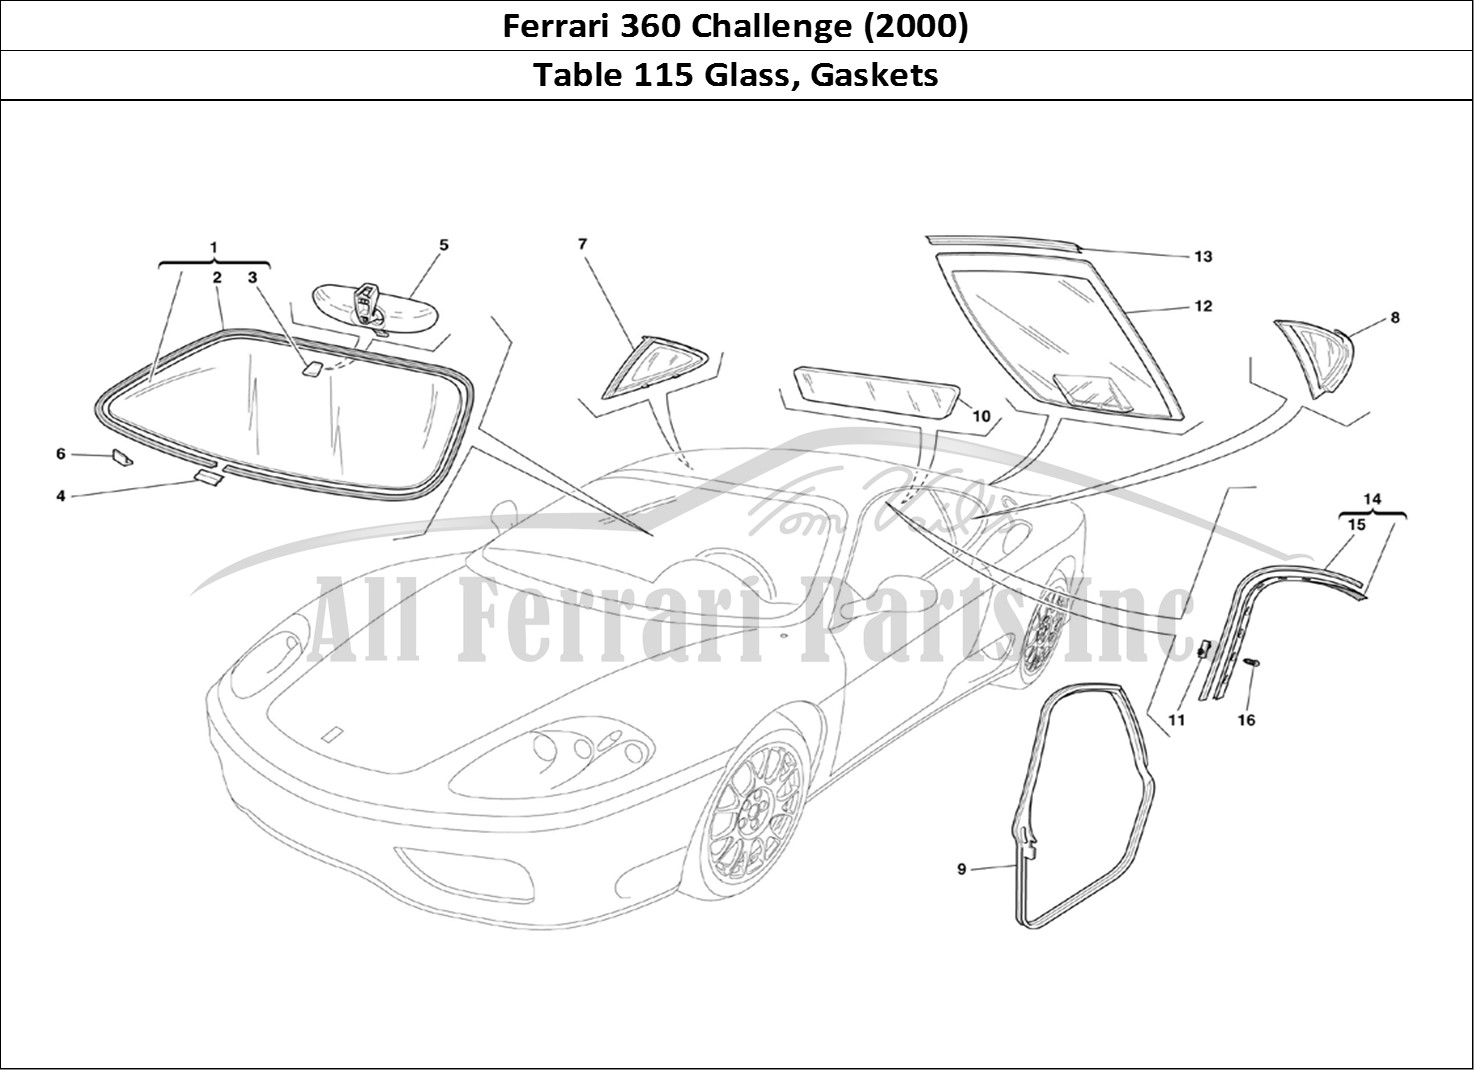 Ferrari Parts Ferrari 360 Challenge (2000) Page 115 Glasses and Gaskets